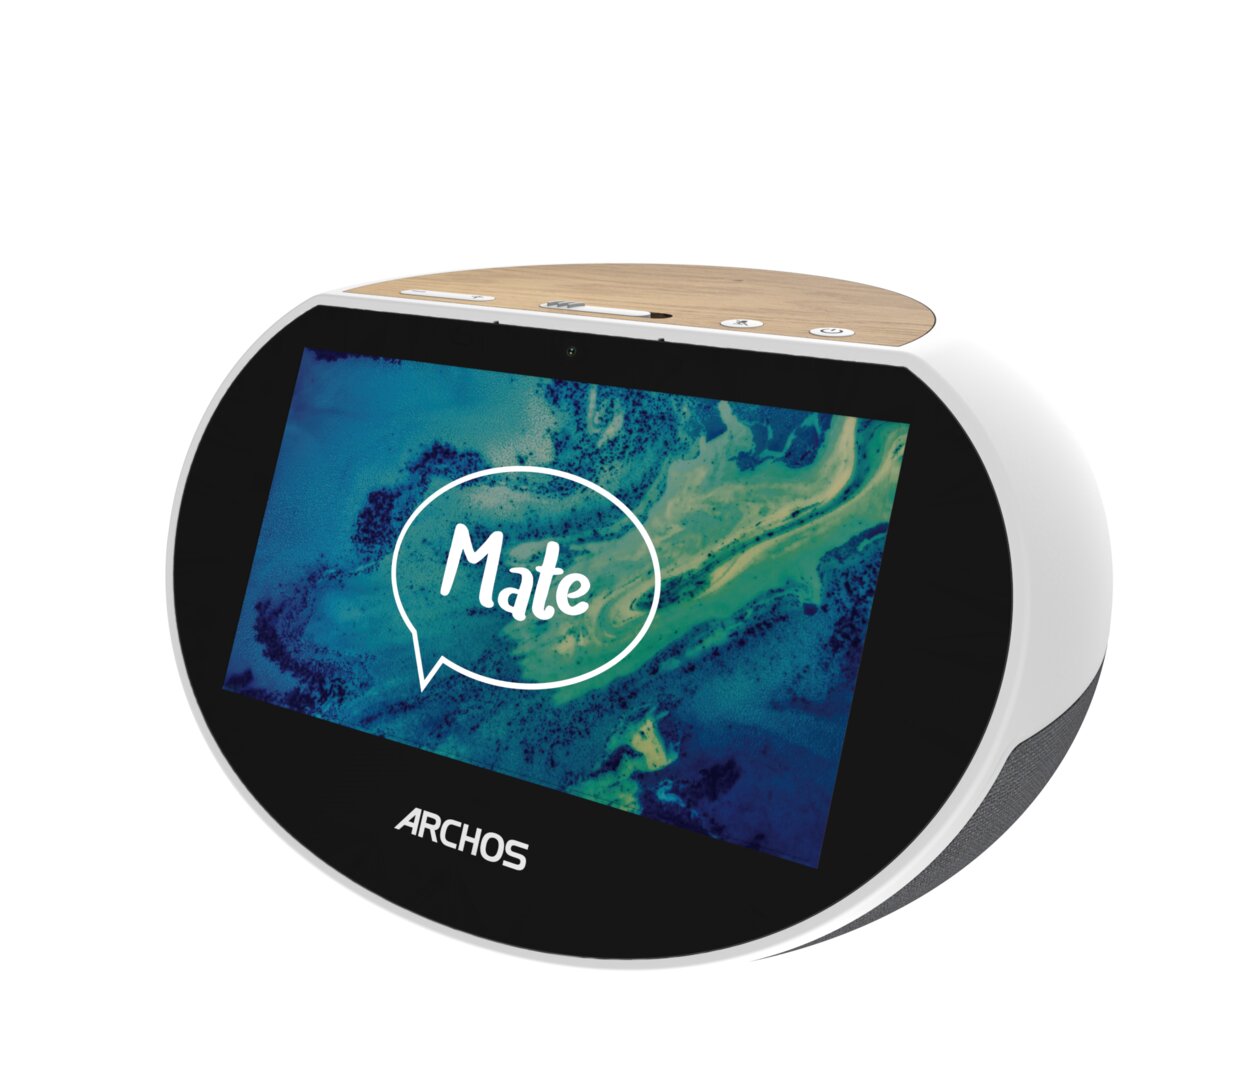 Archos Mate 5: Smart-Display mit Amazon Alexa